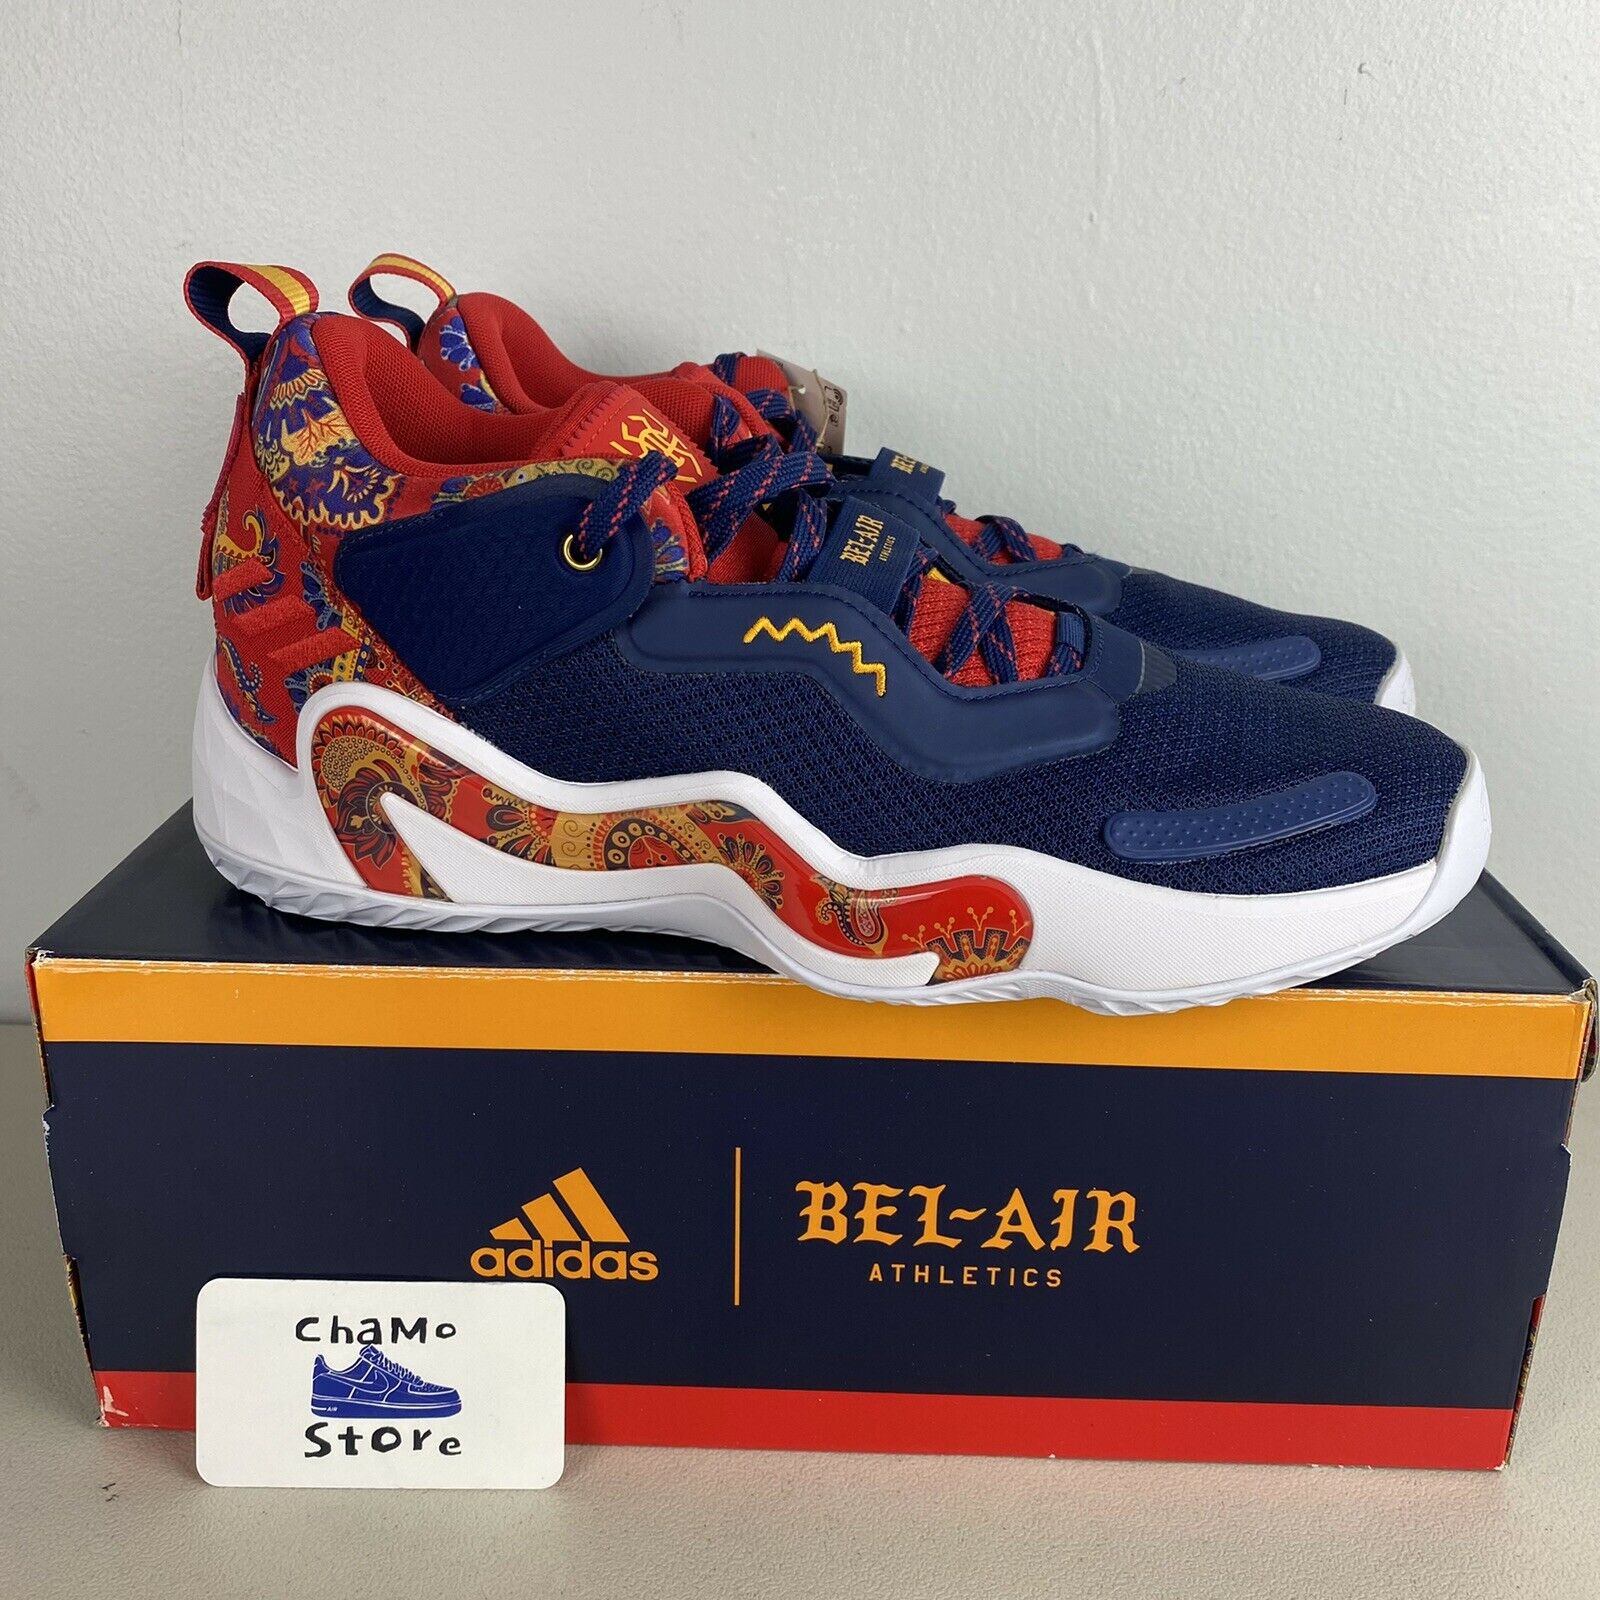 Adidas D.O.N. Issue 3 x Bel Air Athletics Mens Sz 12 Basketball Shoes H68047